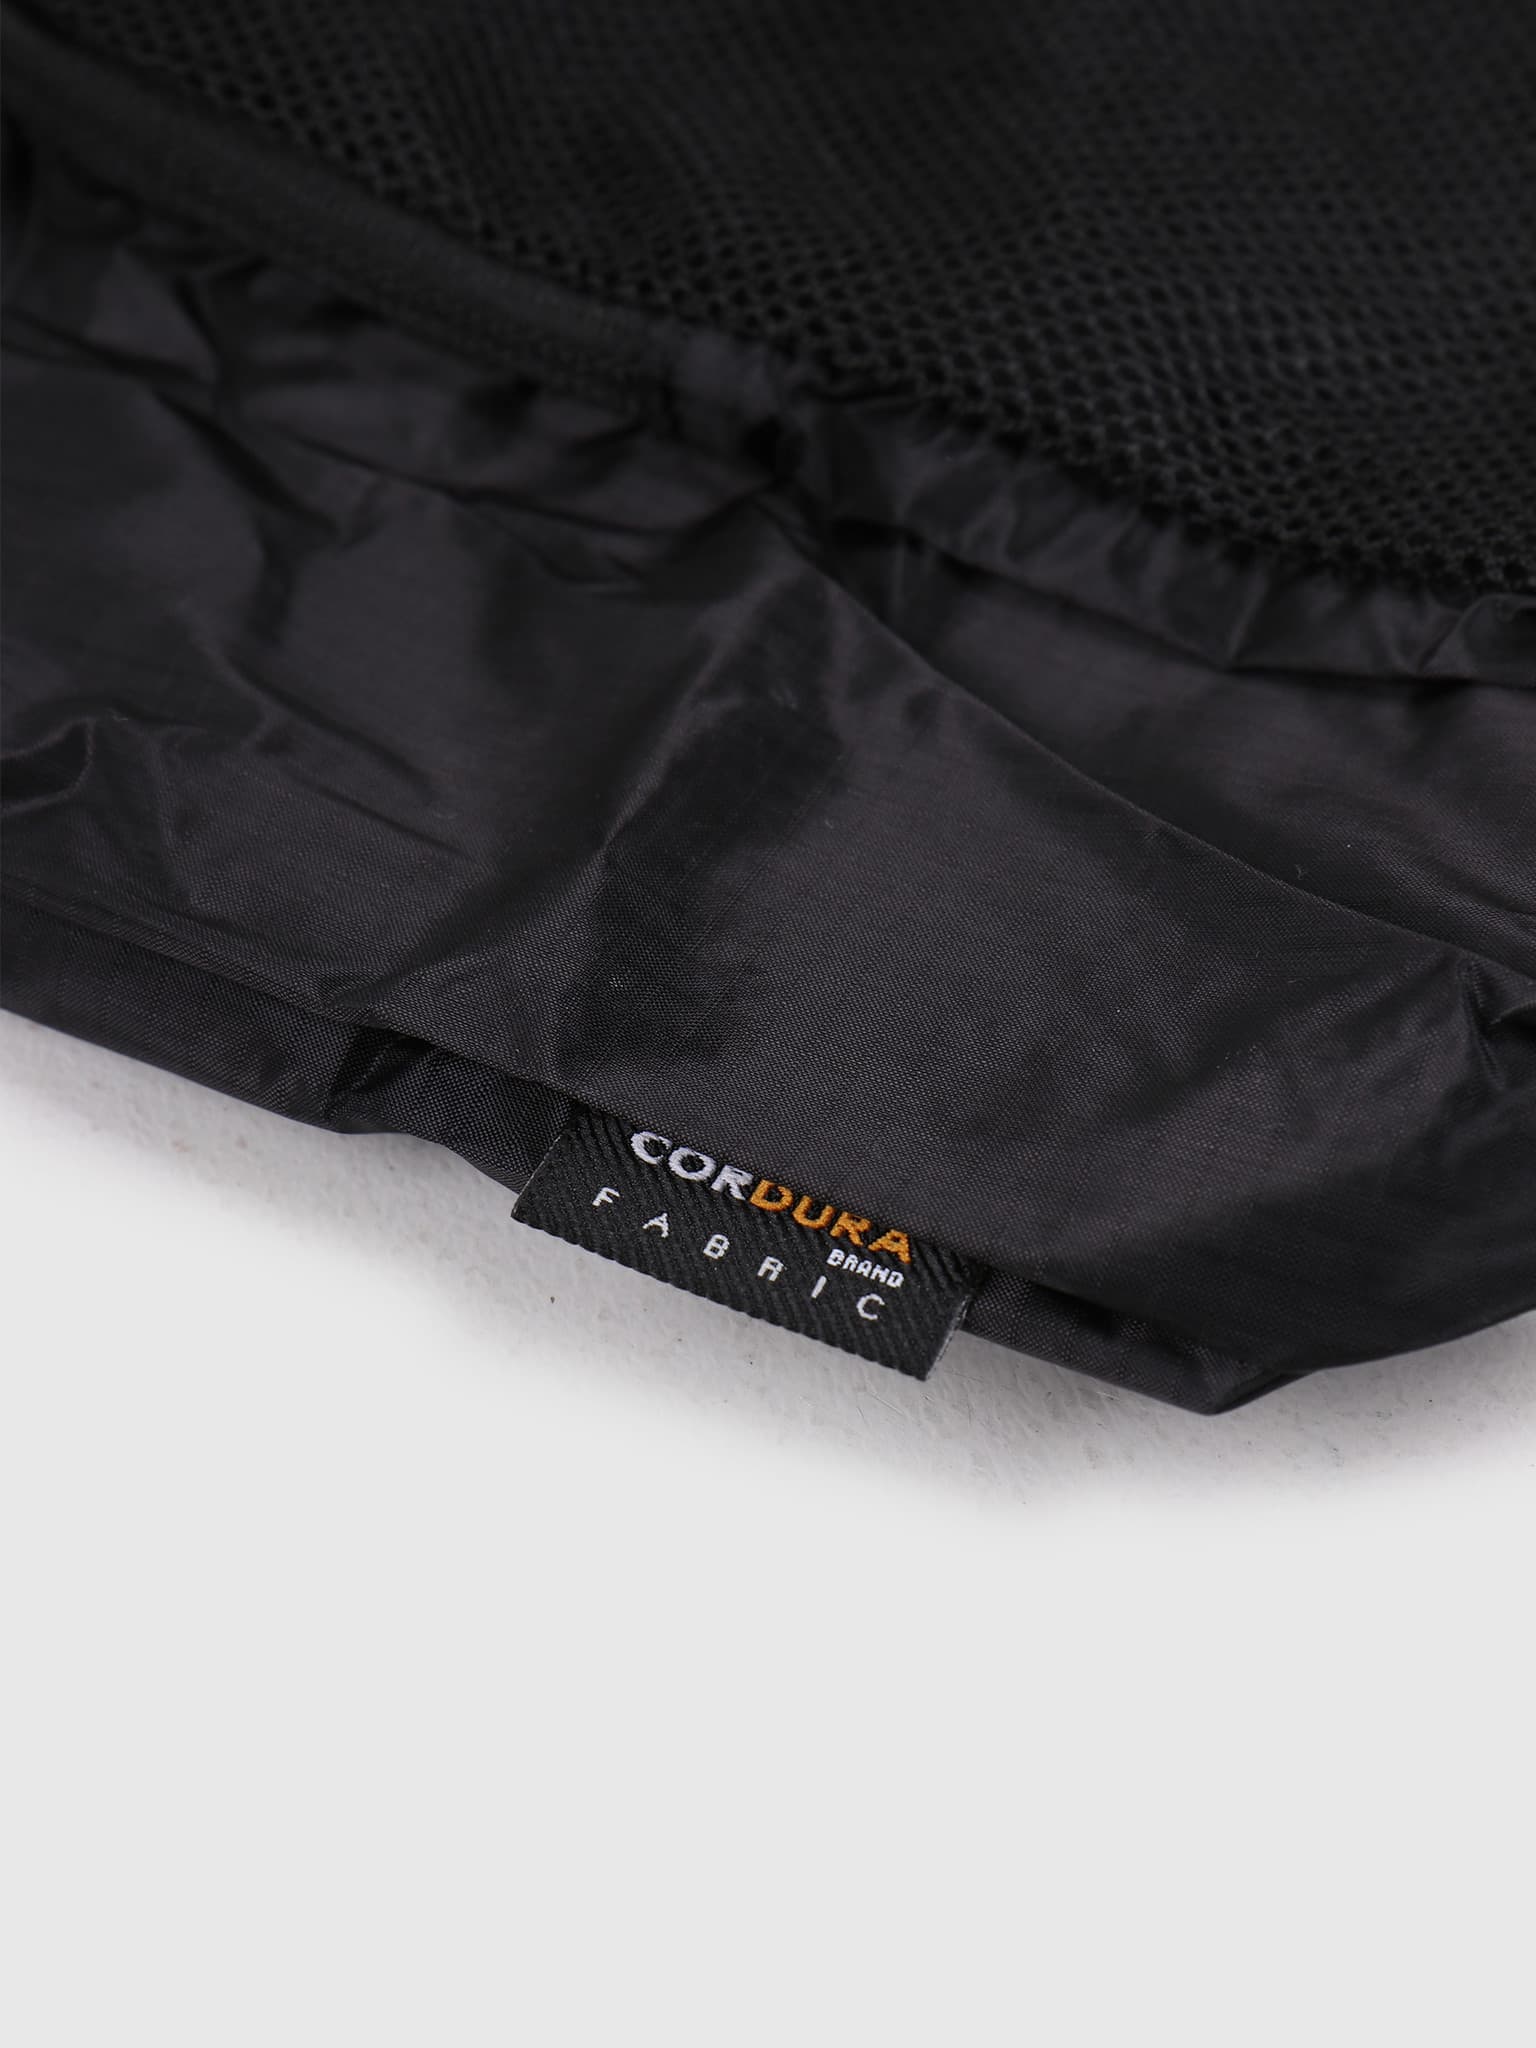 Pocketable Tote Bag Type 01 One Black UG-62400BK